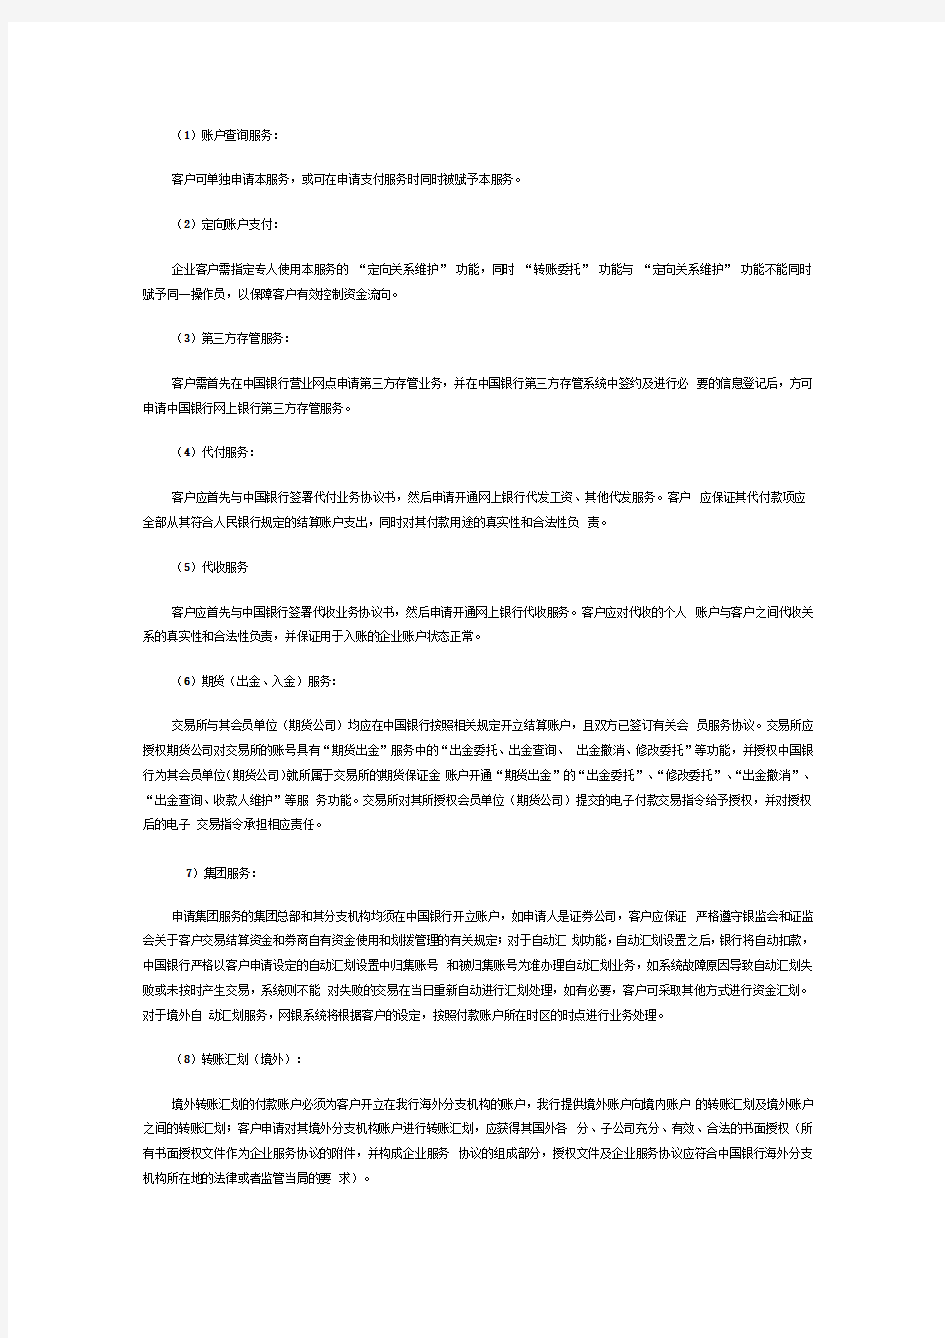 xxxx0217中国银行股份有限公司网上银行企业服务业务规则doc-中国